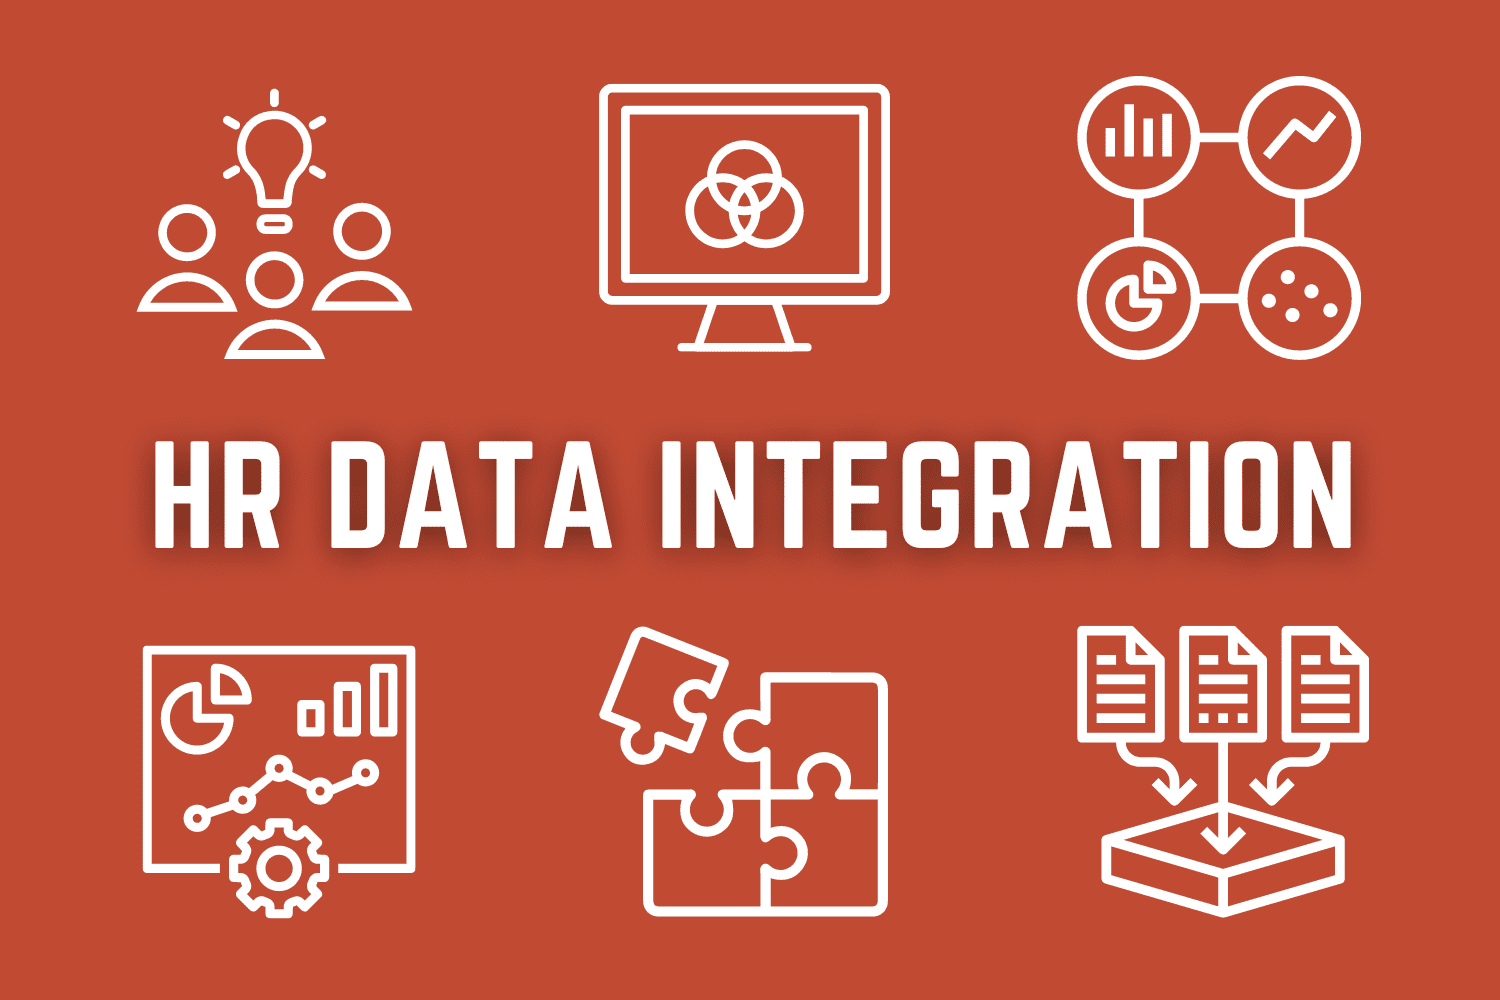 HR Data Integration: Streamlining Data with HR Technology